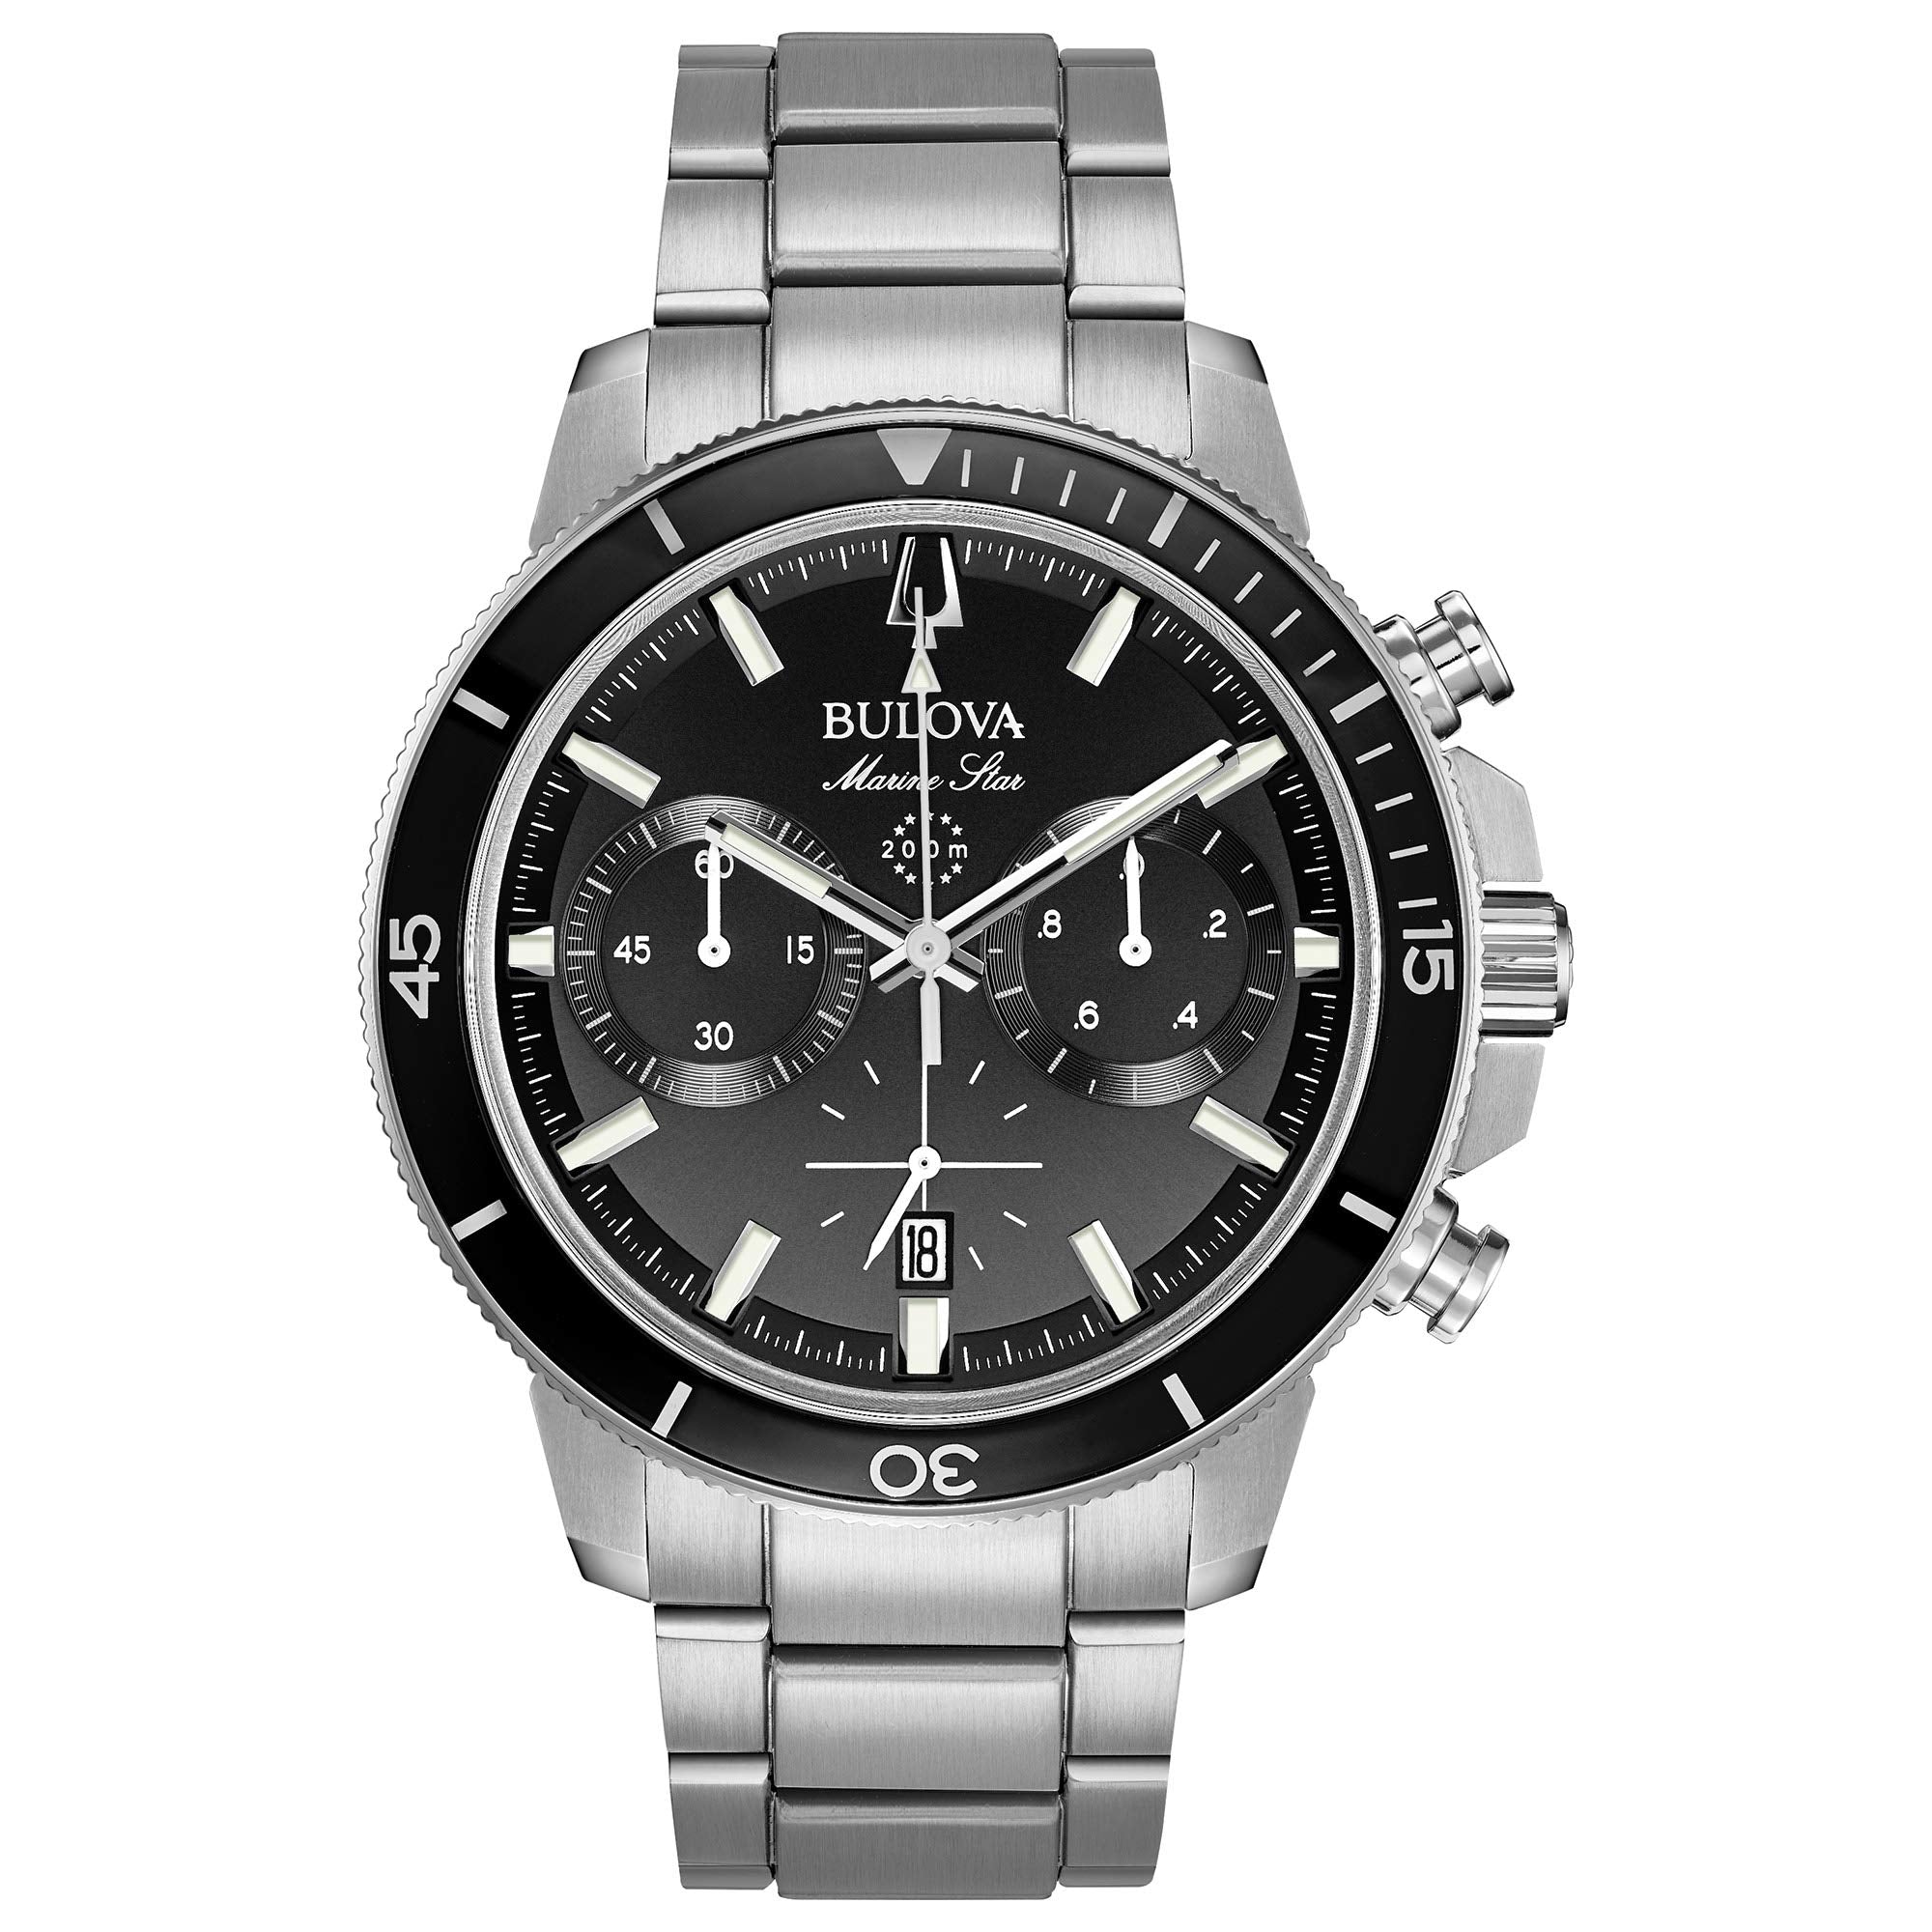 Bulova Marine Star Stainless Steel Chronograph Watch on Bracelet - 96B272